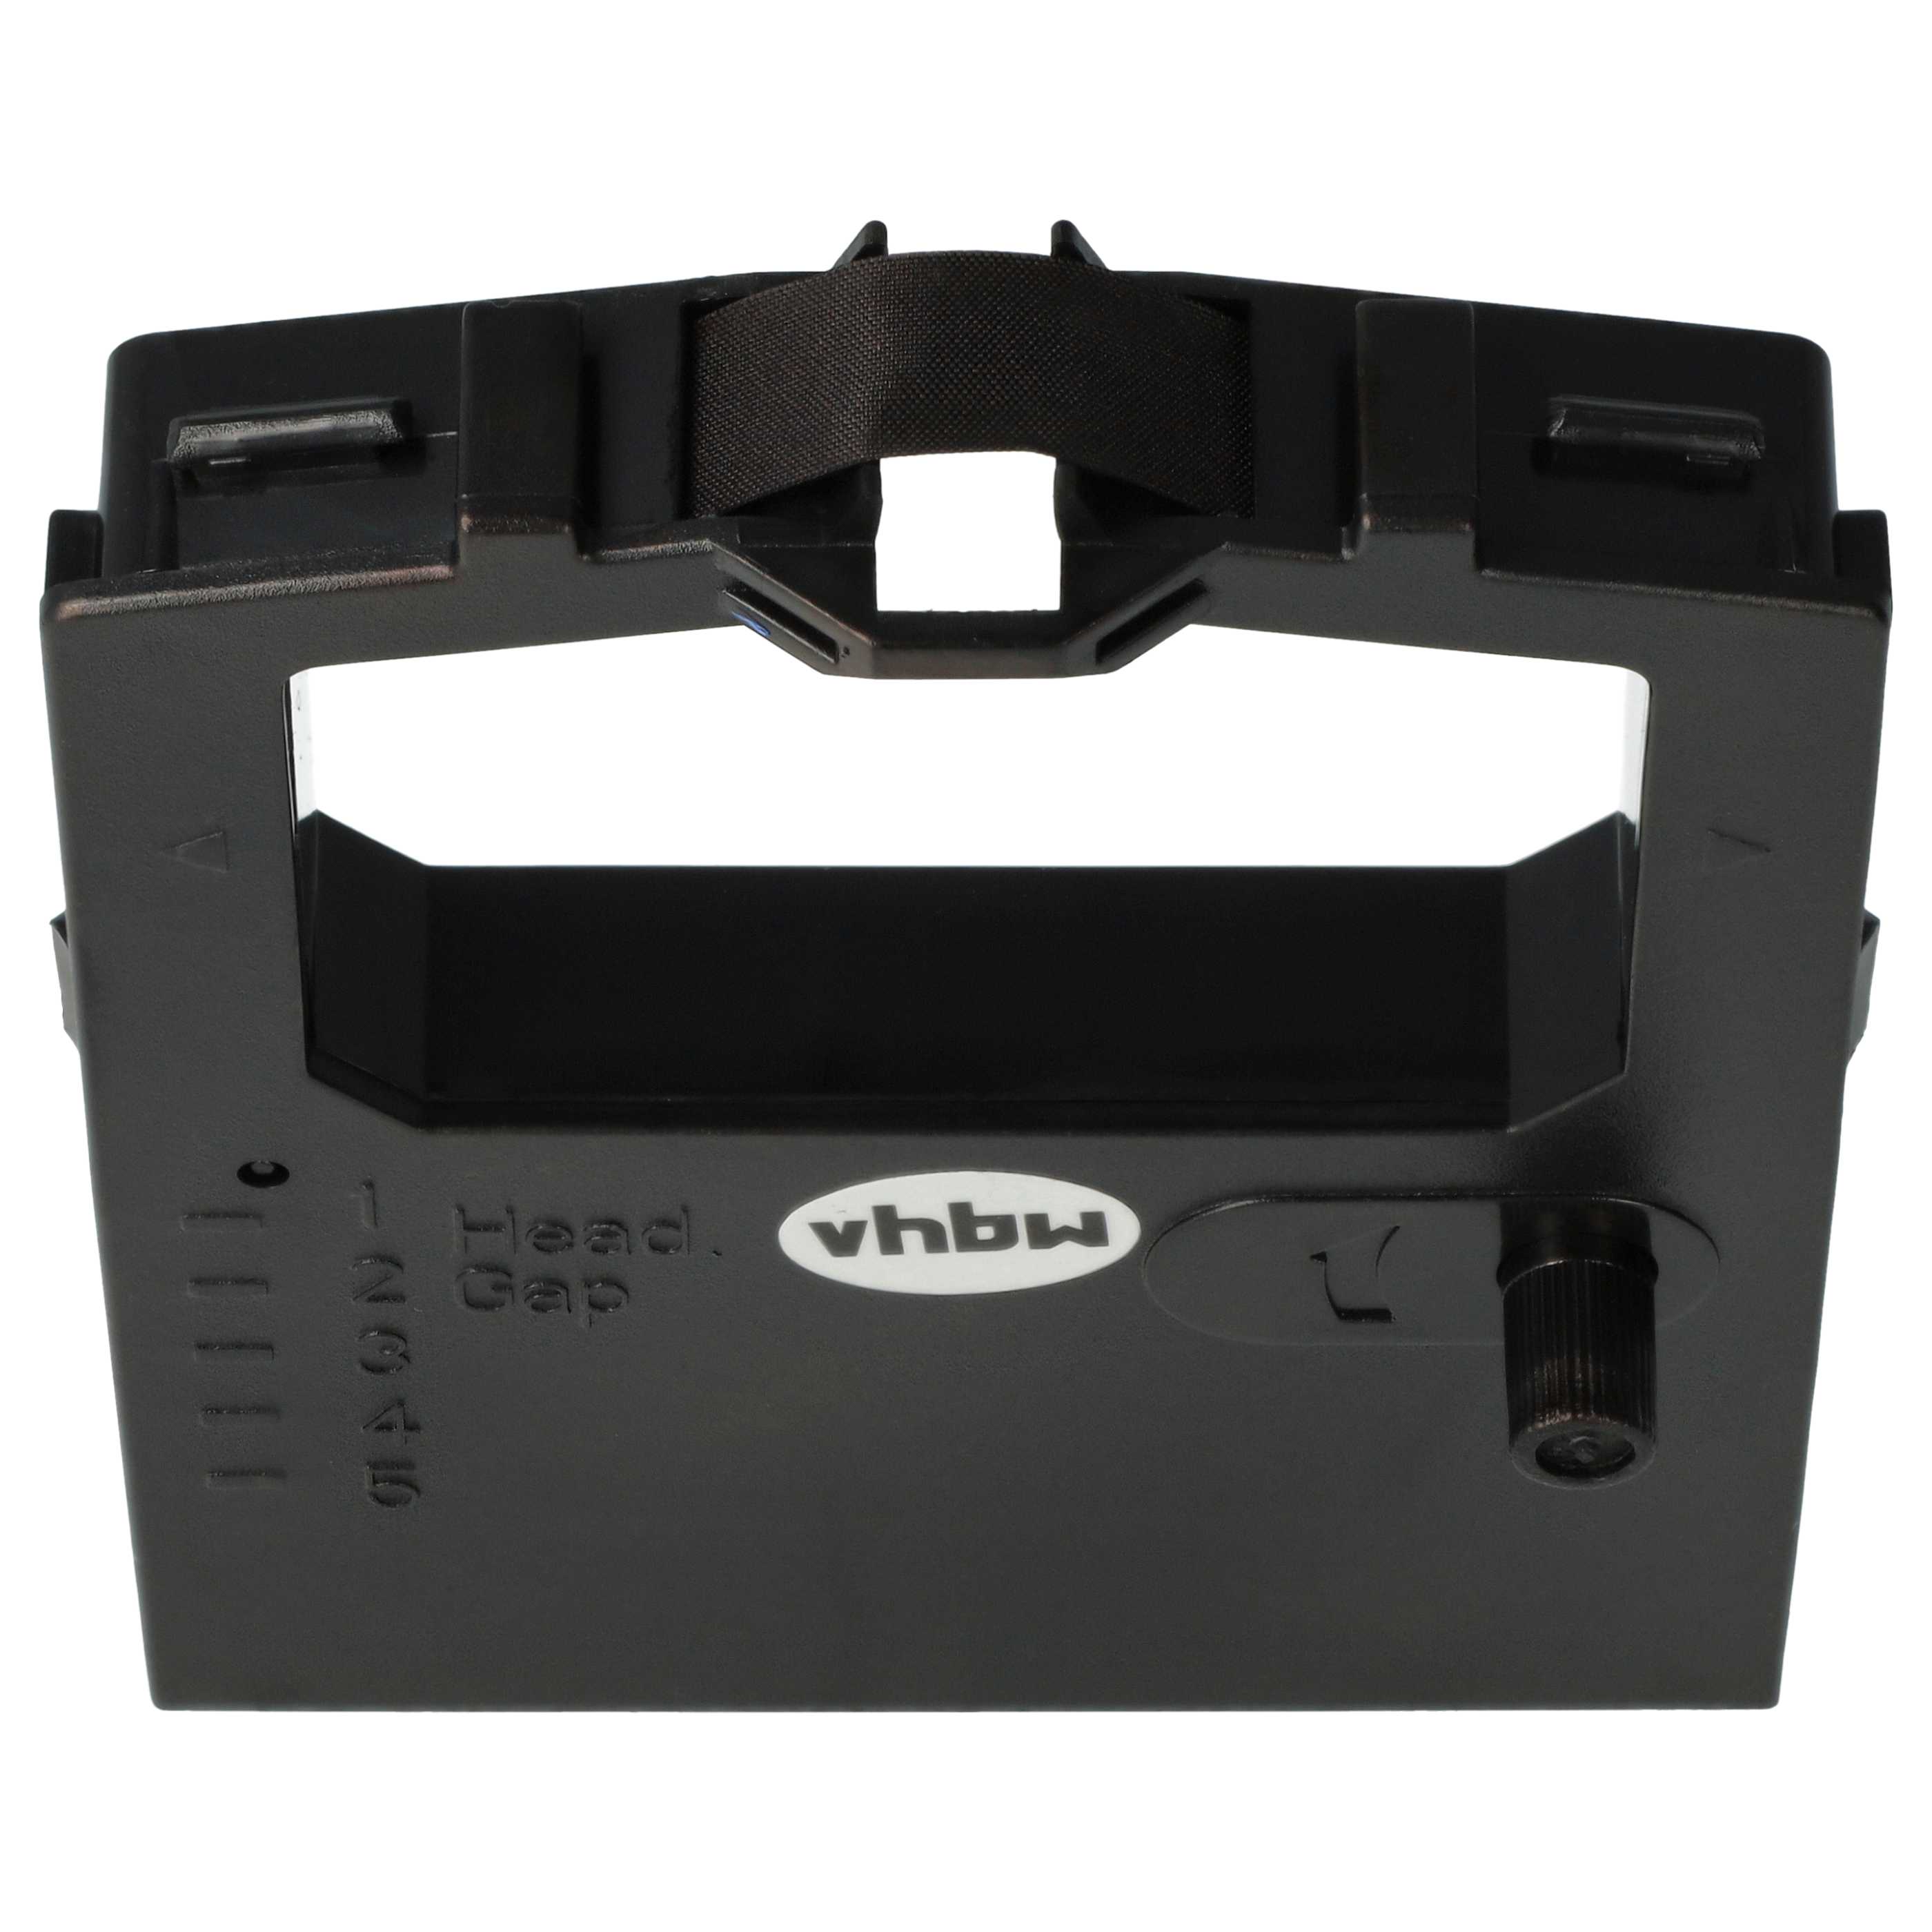 5x Ink Ribbon replaces 9002309 for OKI Dot Matrix, Receipt Printer etc. - - Black